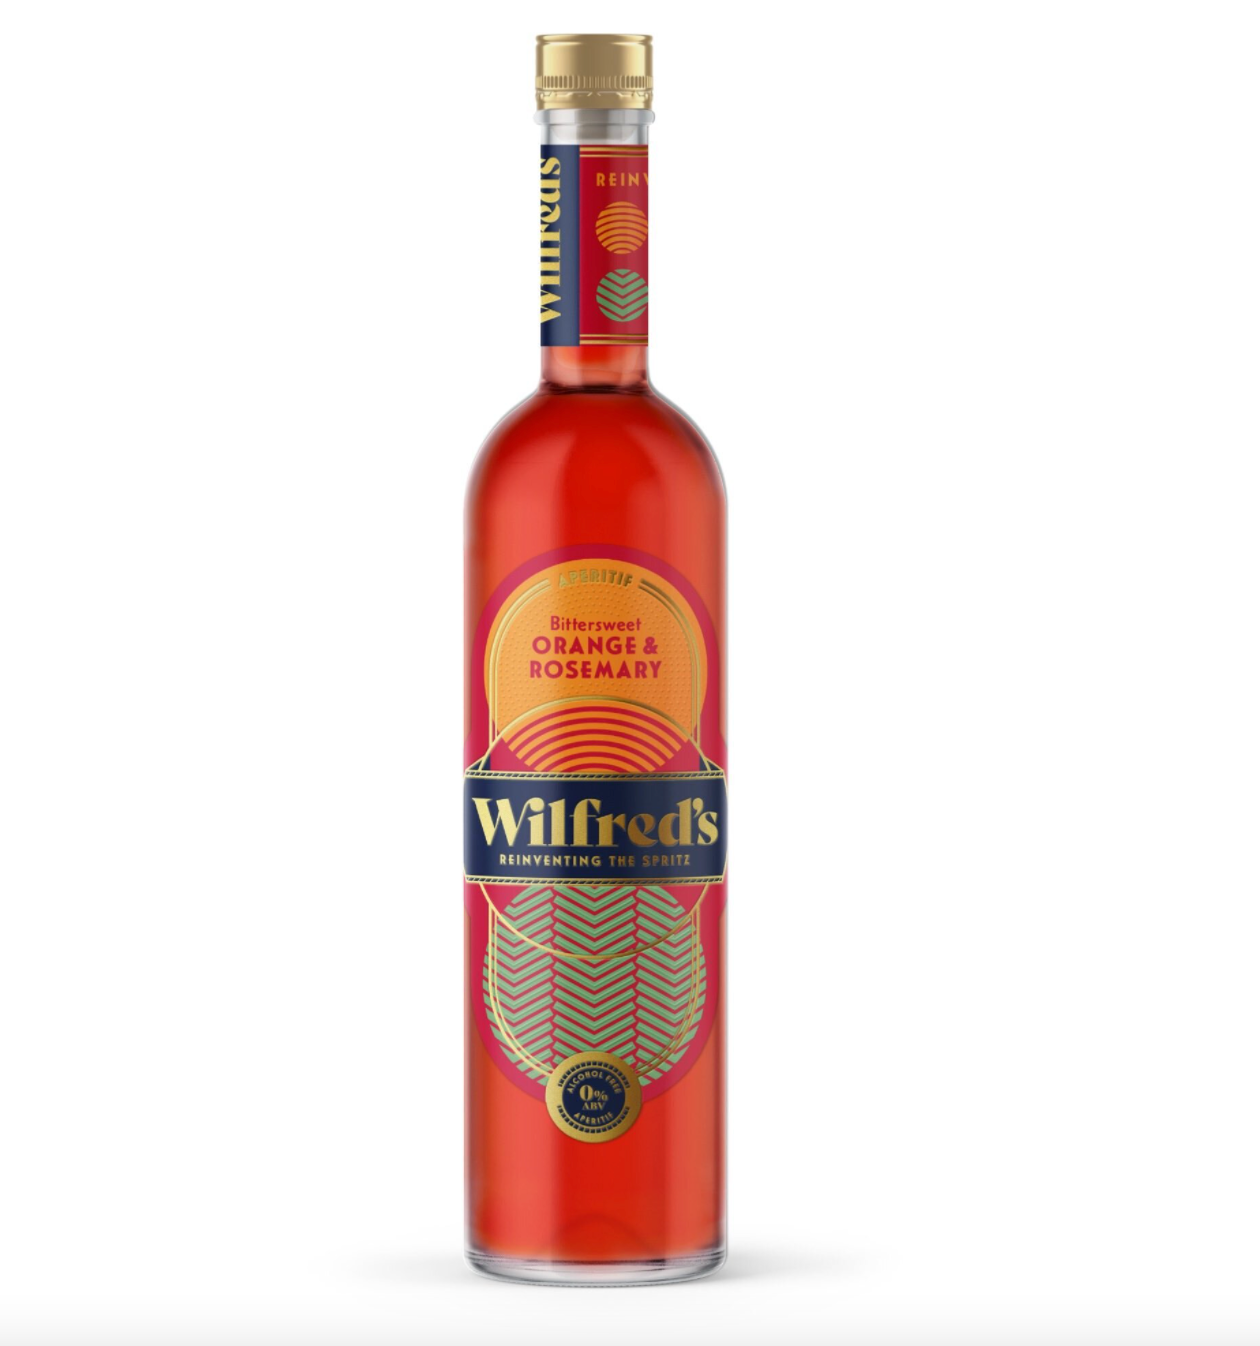 Wilfred's - Bittersweet Orange & Rosemary Apéritif